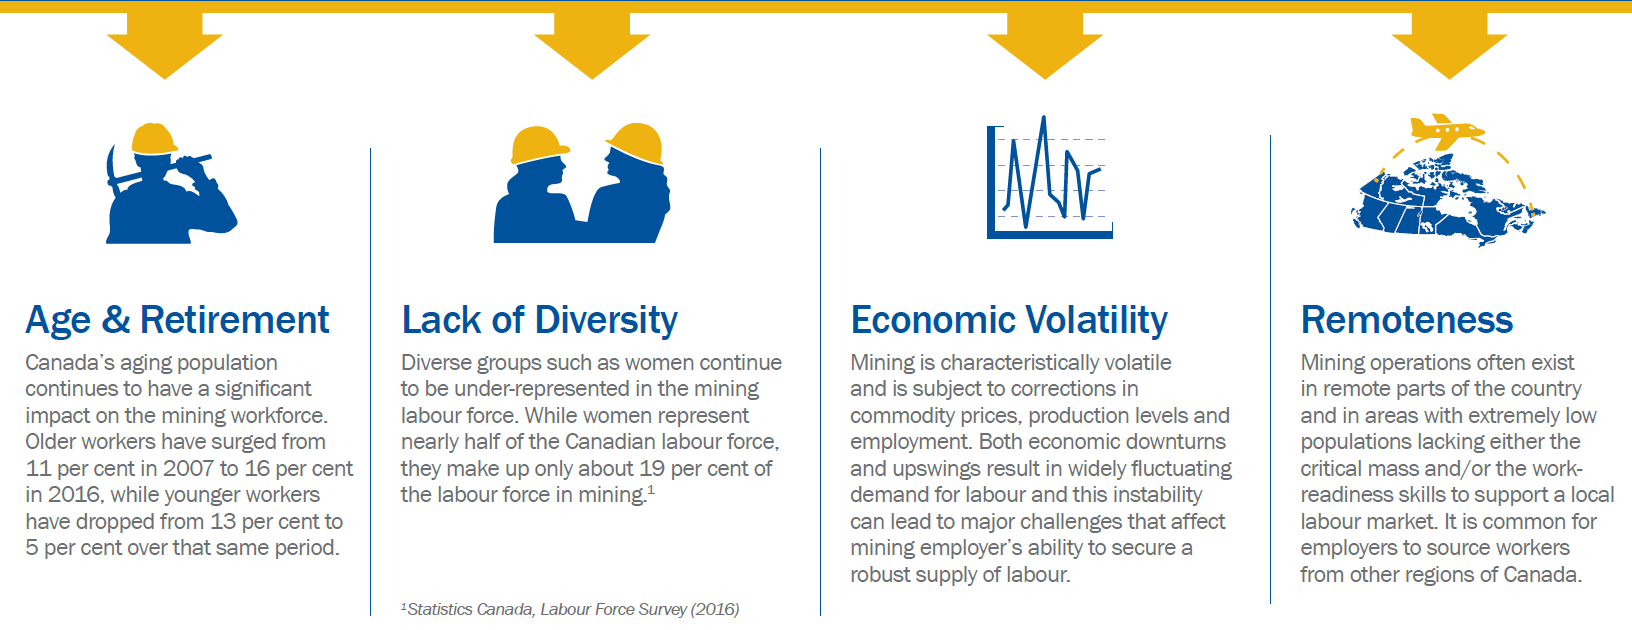 Factors that exacerbate mining’s tight labour market: